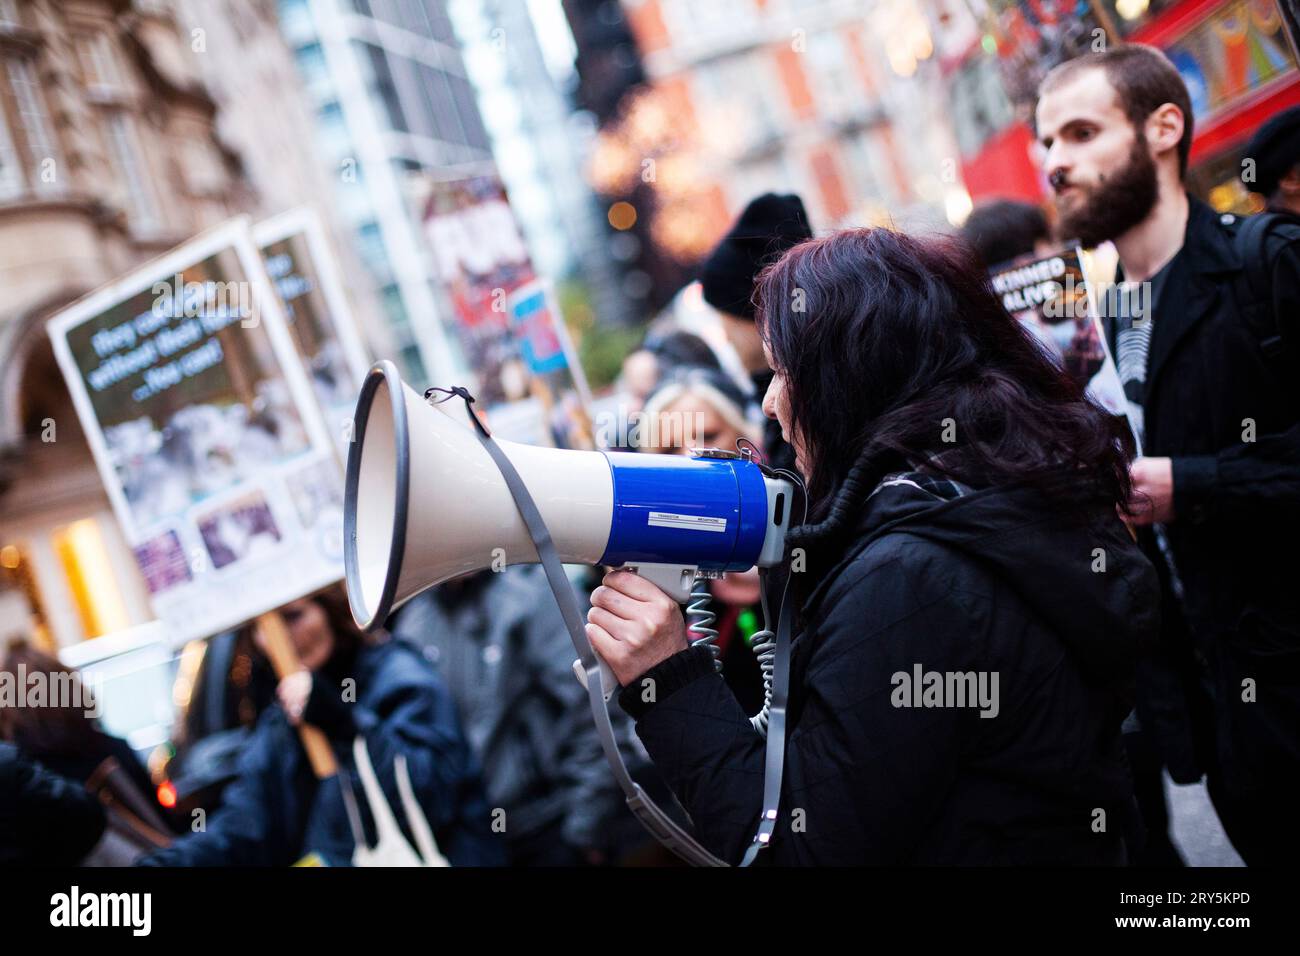 Tierschutzproteste vor Harvey Nichols London 30. November 2013 - Lady spricht in Megaphon Stockfoto